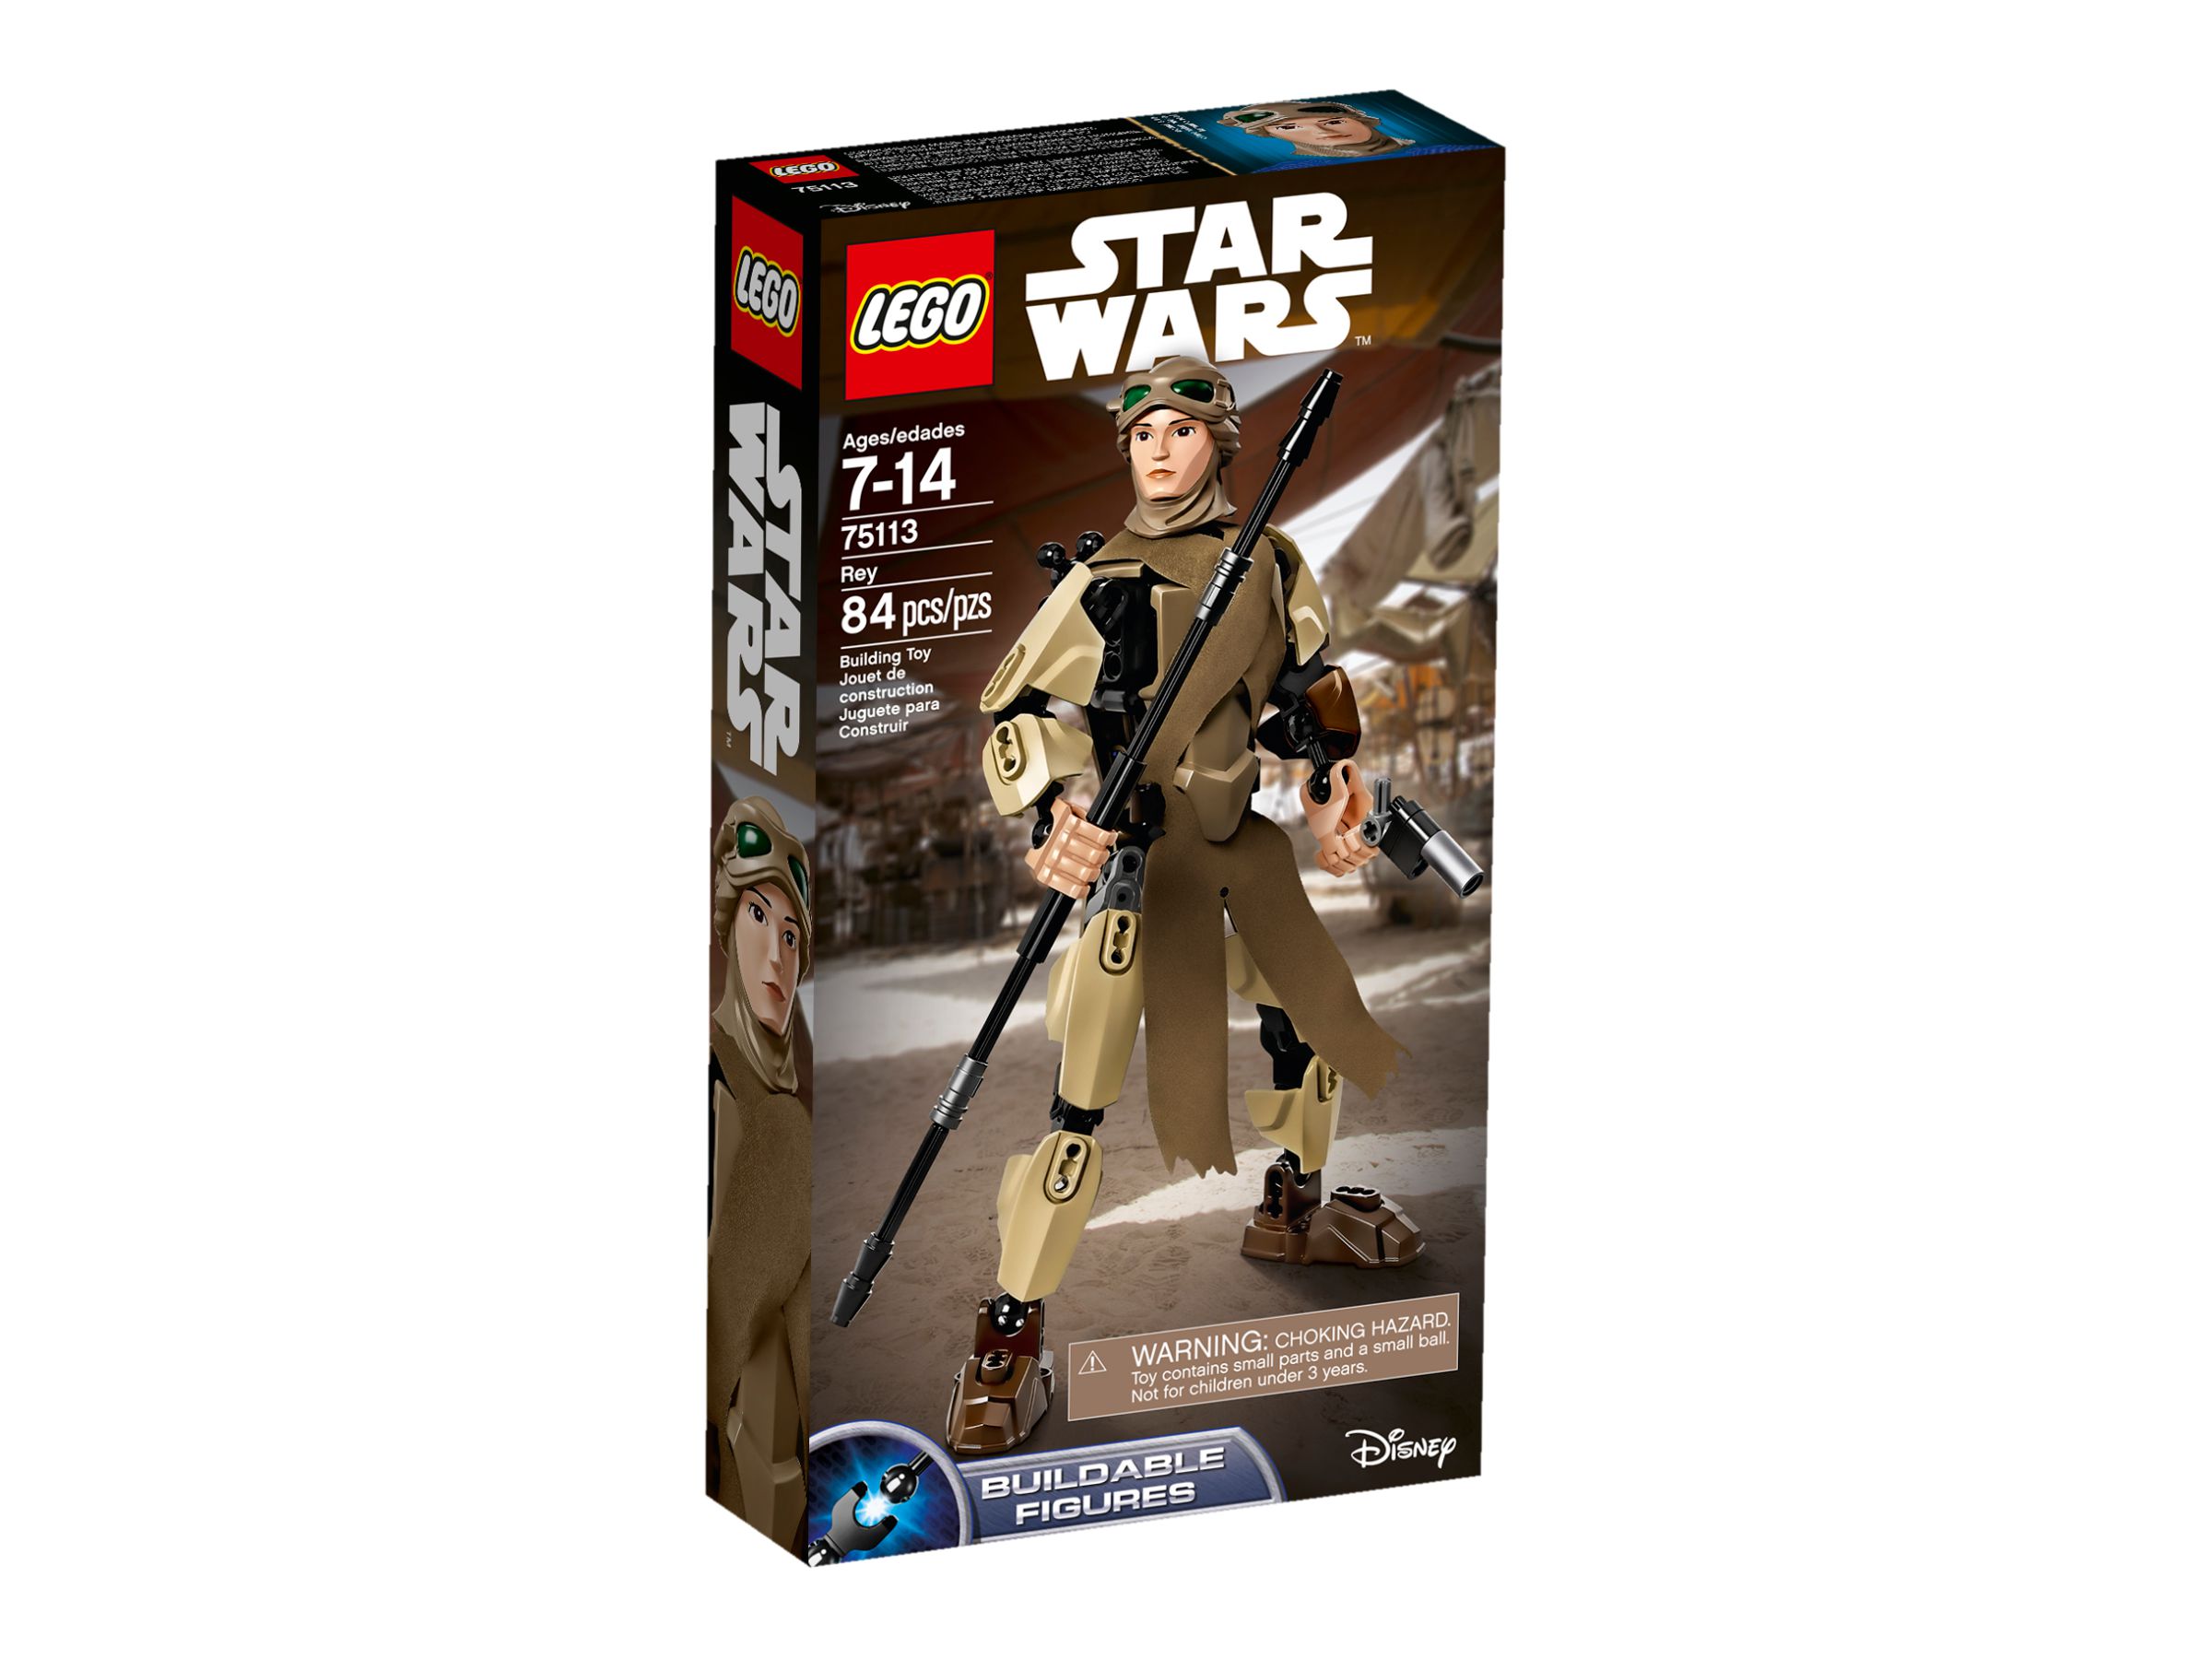 LEGO Star Wars Buildable Figures 75113 Rey LEGO_75113_alt1.jpg